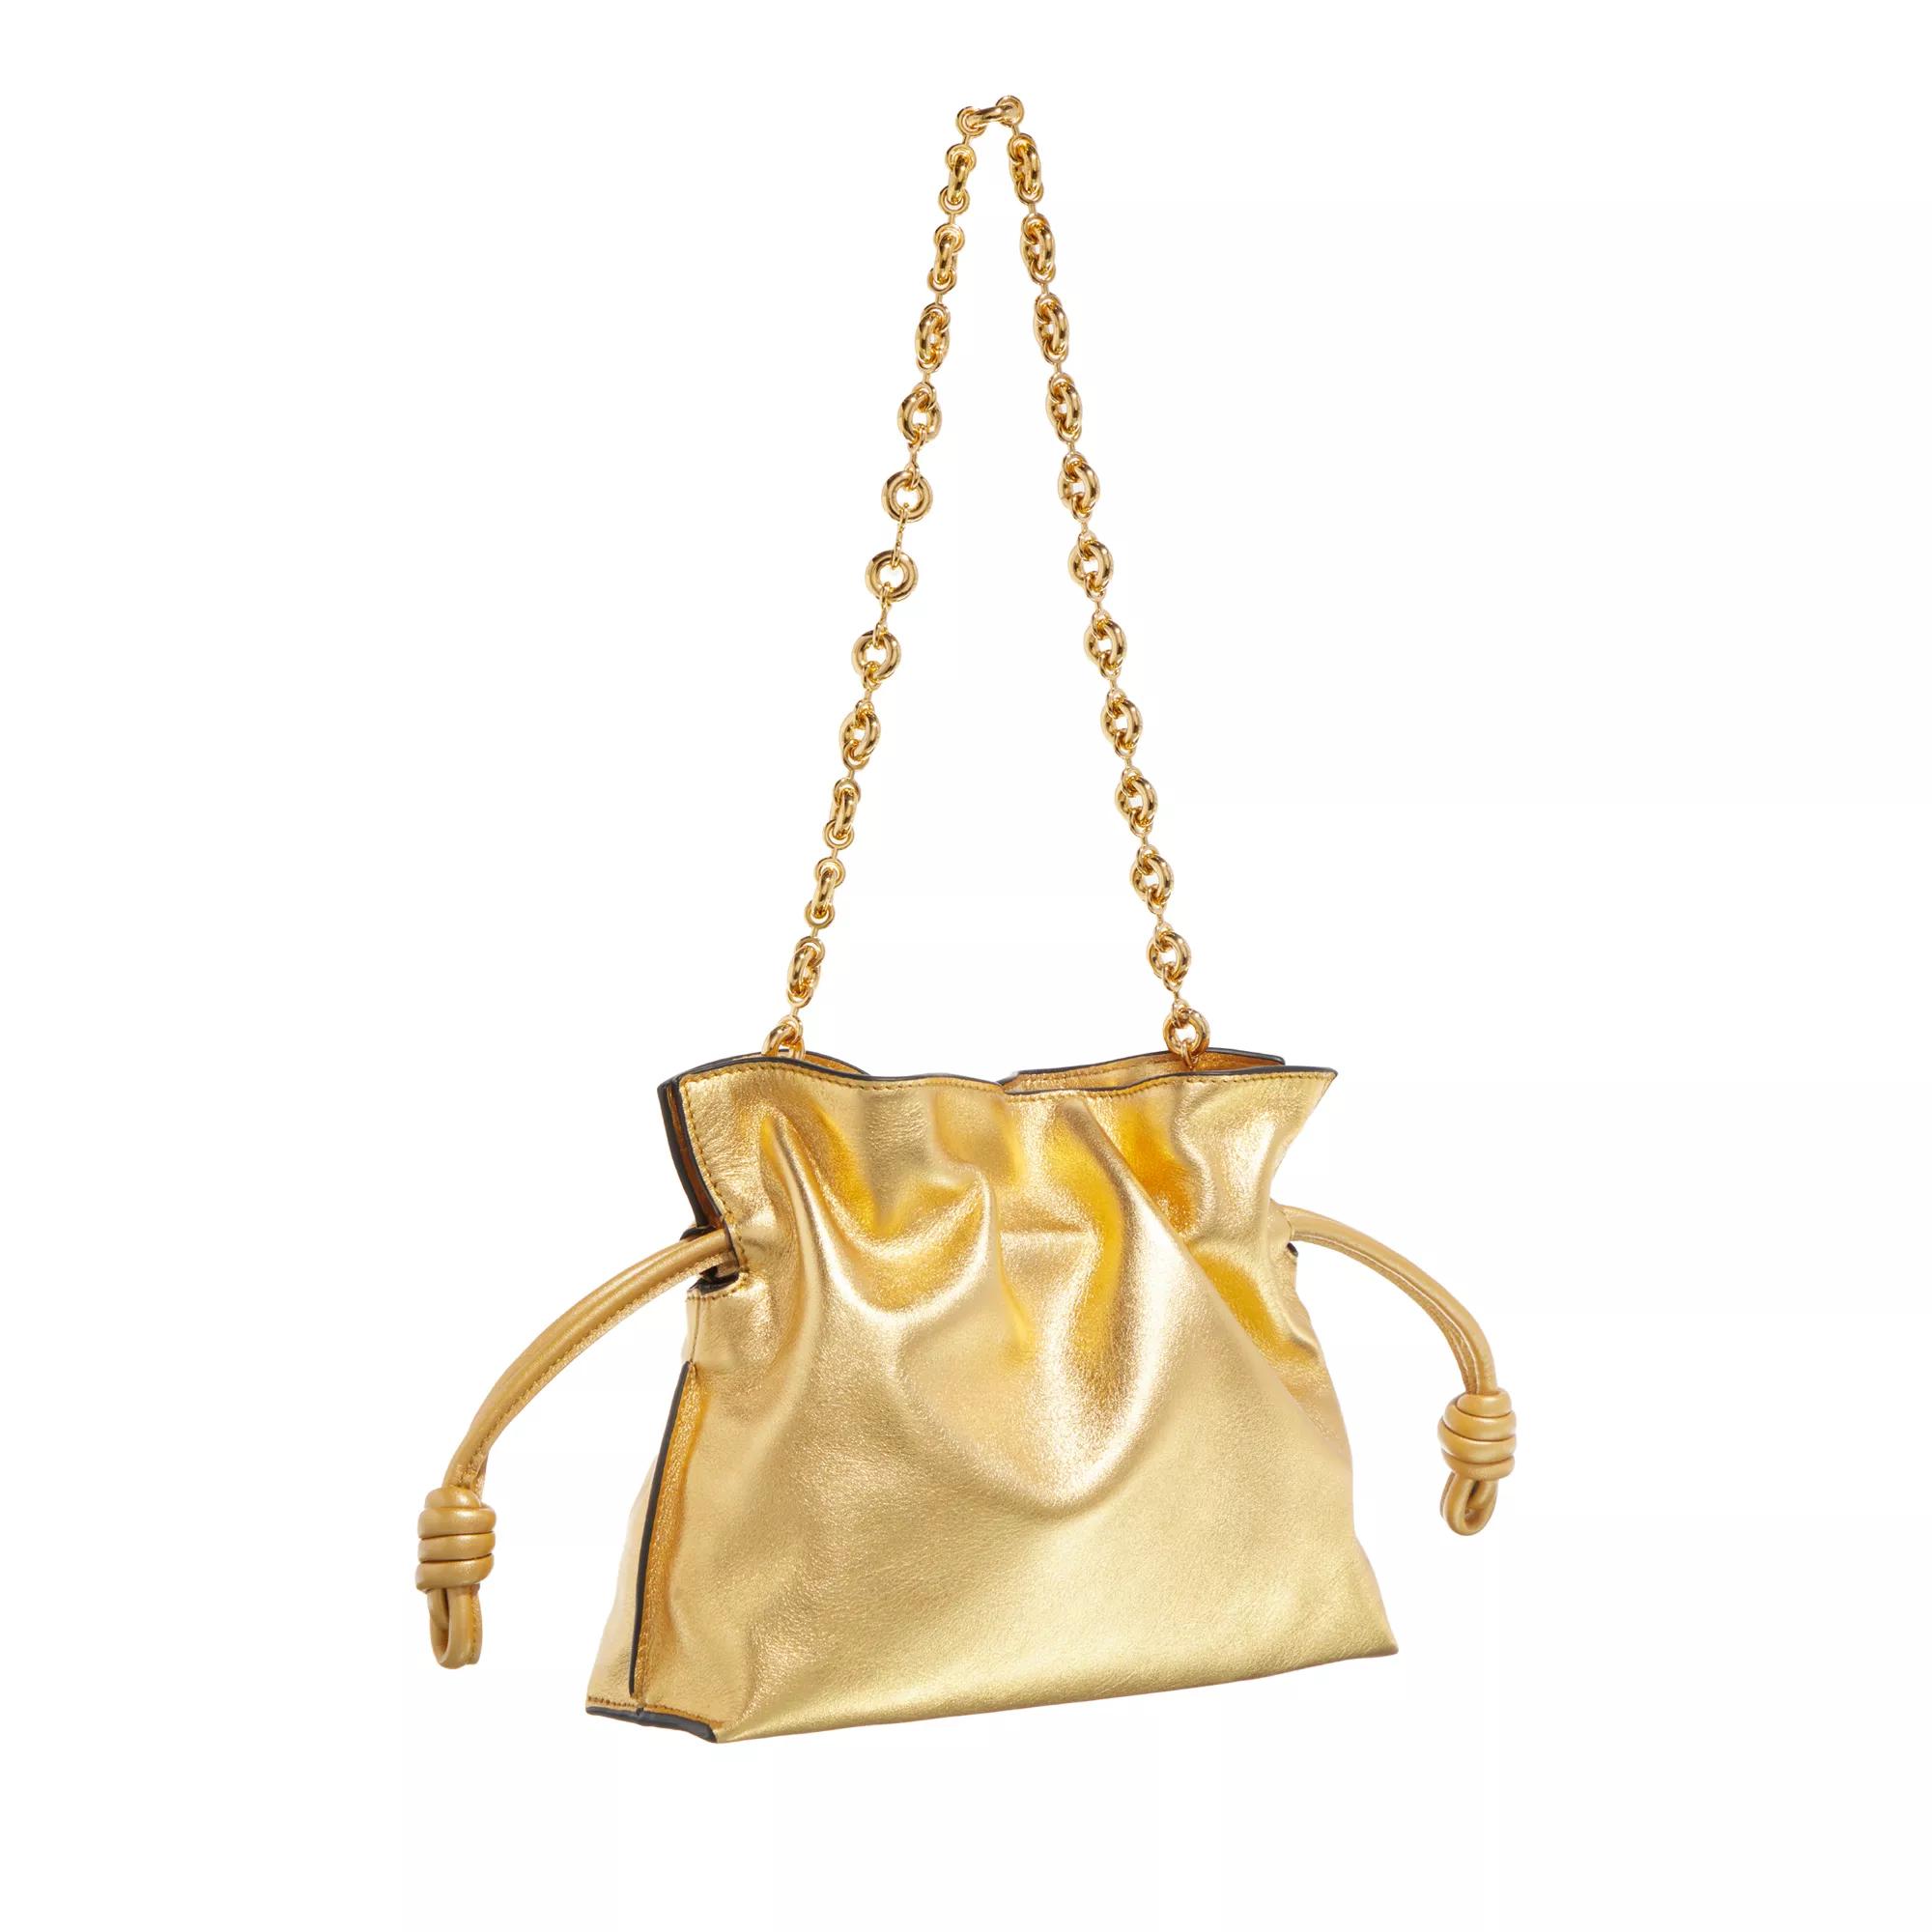 Loewe Kleine handtassen - Clutch Mini in goud